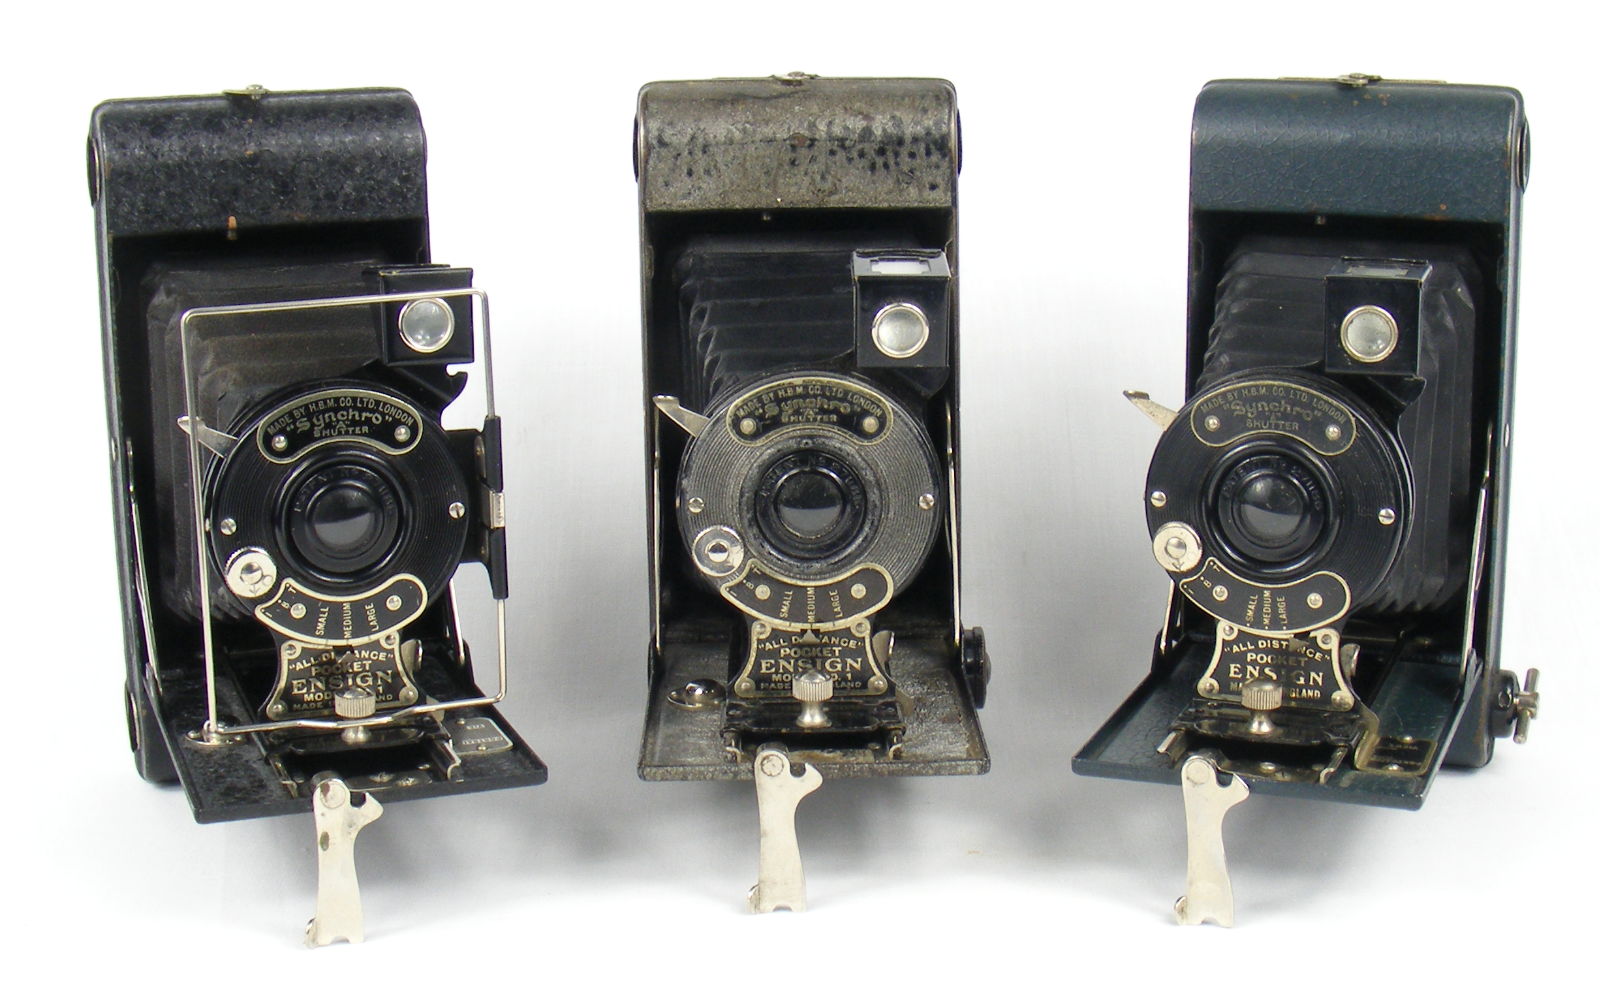 Image of All Distance Pocket Ensign Folding Camera (blue, silver/grey and black variants)